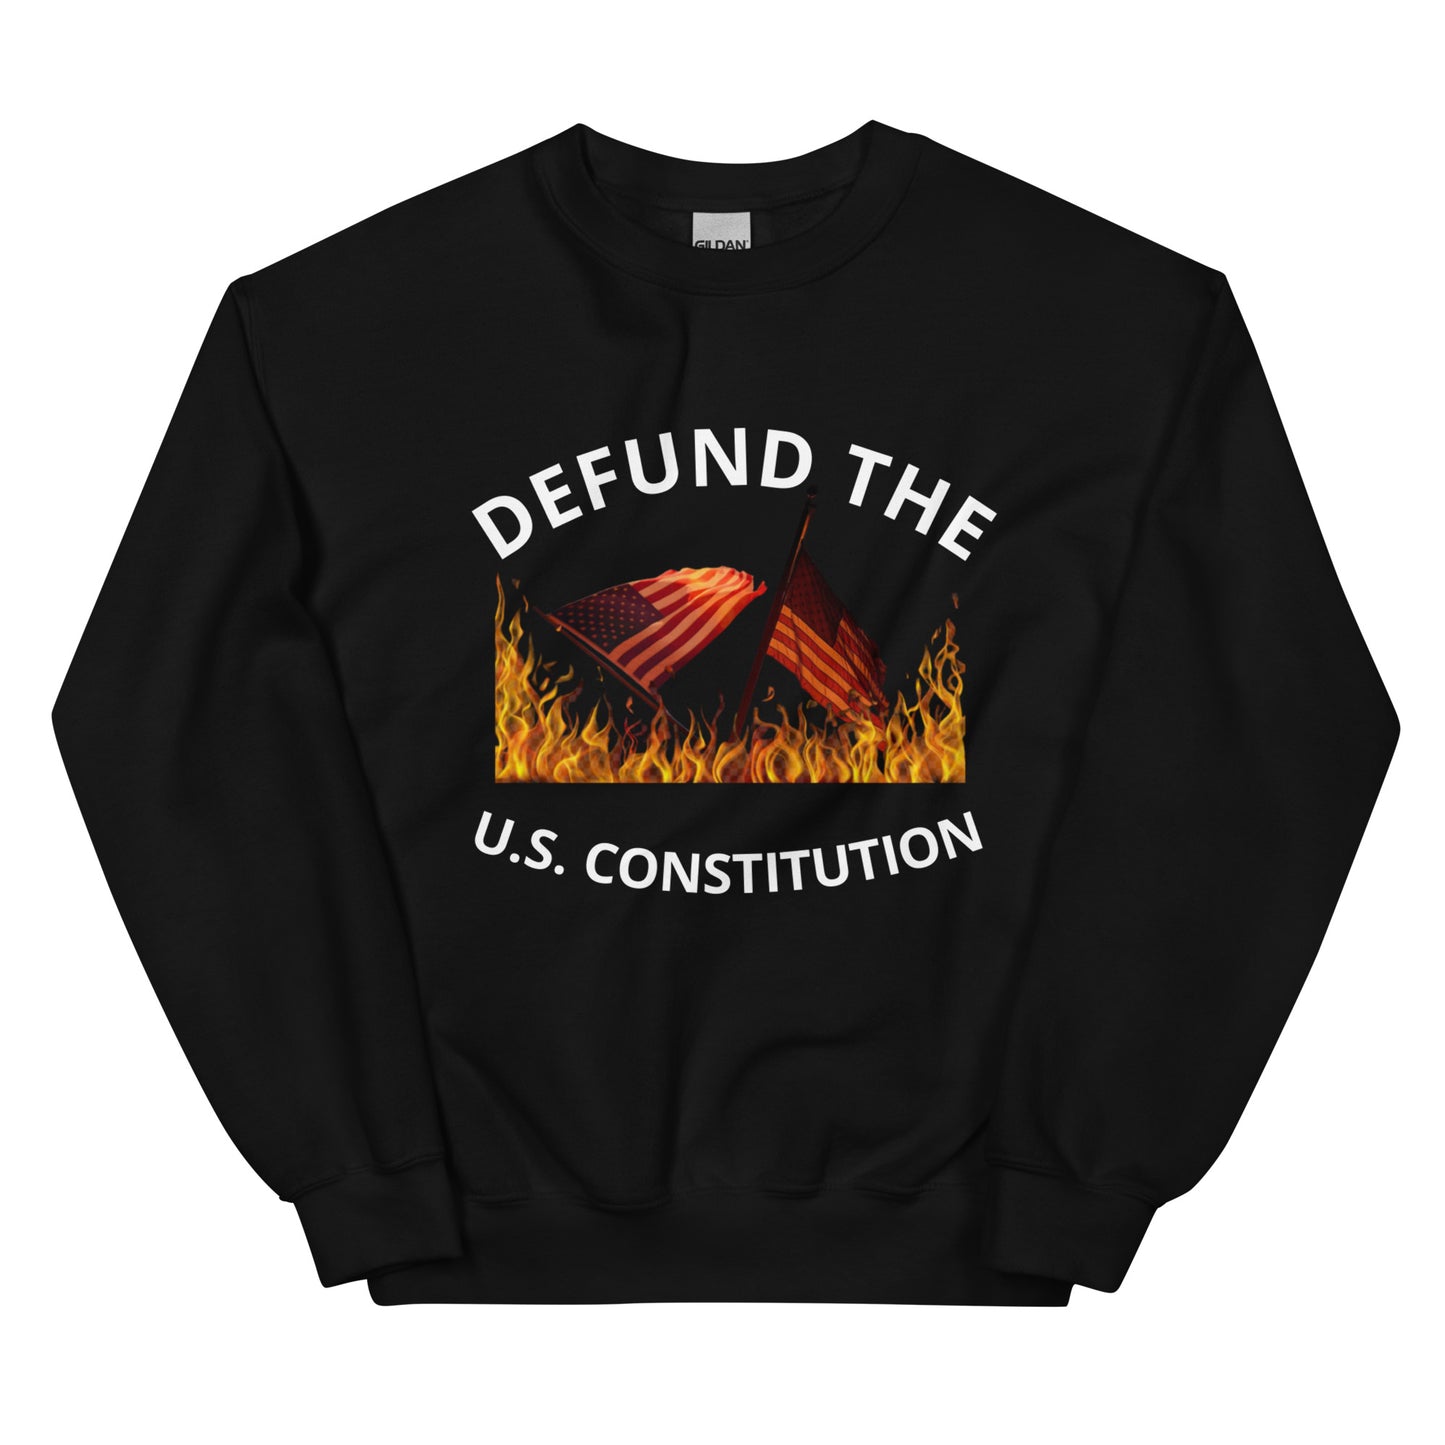 DEFUND THE U.S. CONSTITUTION